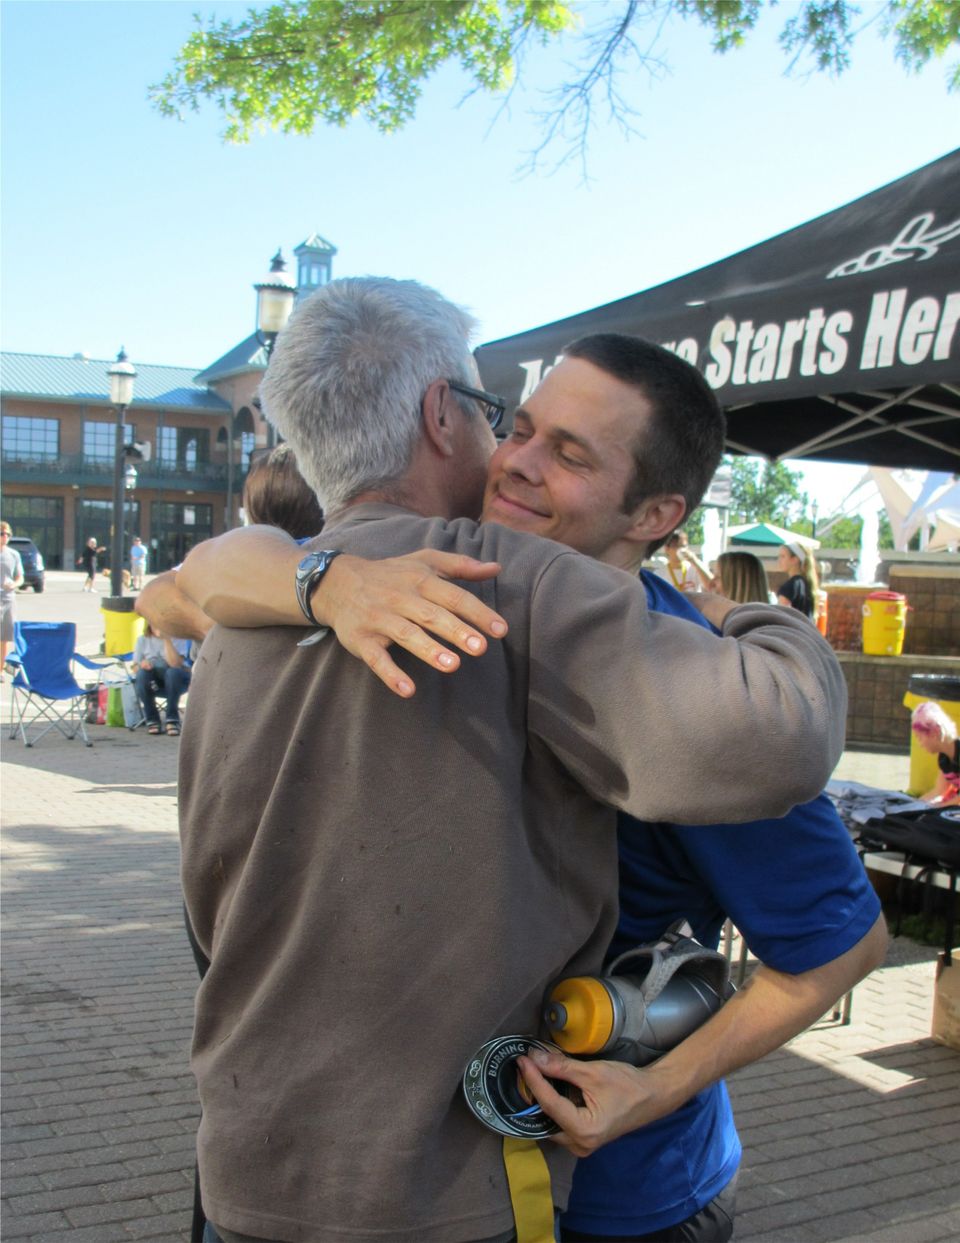 Matt hugging Dad after race